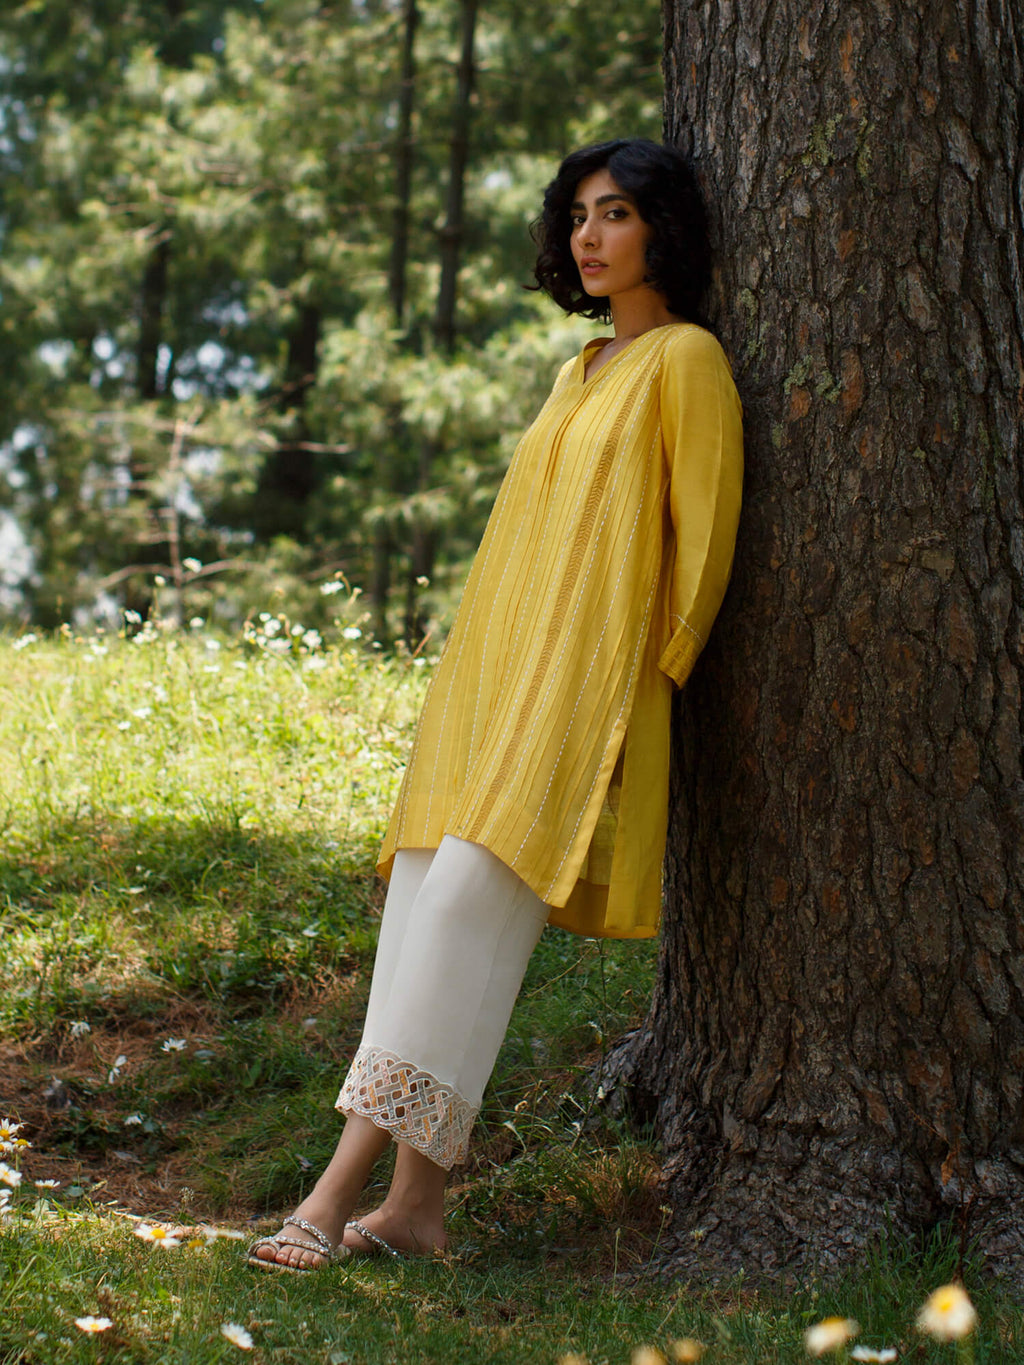 Occasion Wear - Formal Dresses | Misha Lakhani